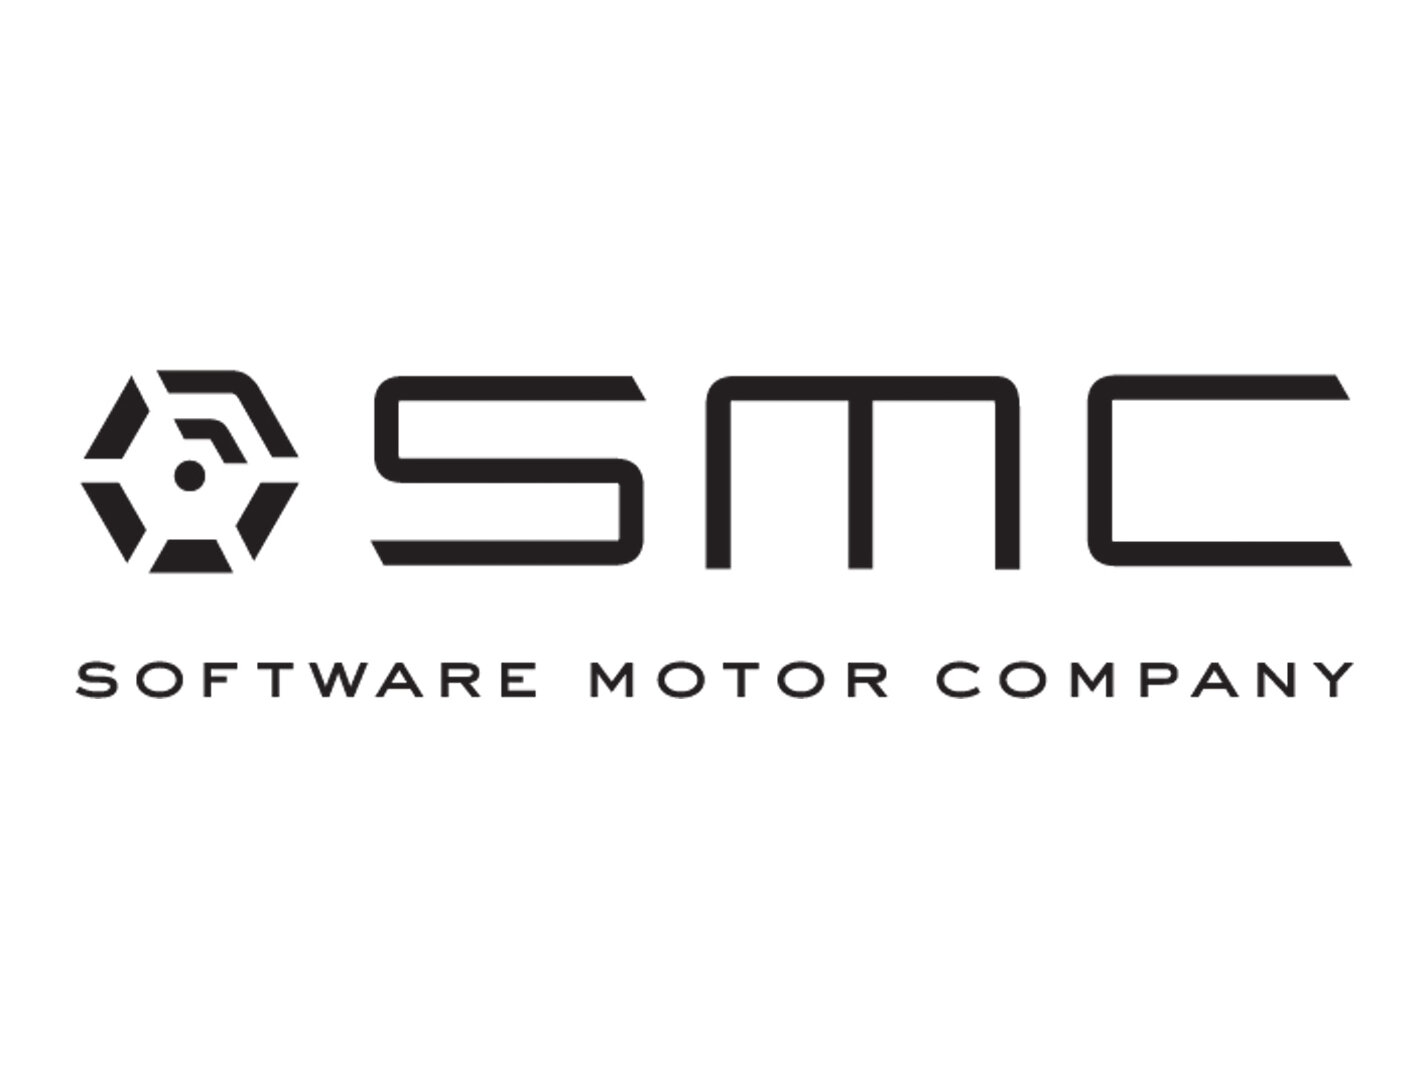 Software Motor Corporation 2018.jpg